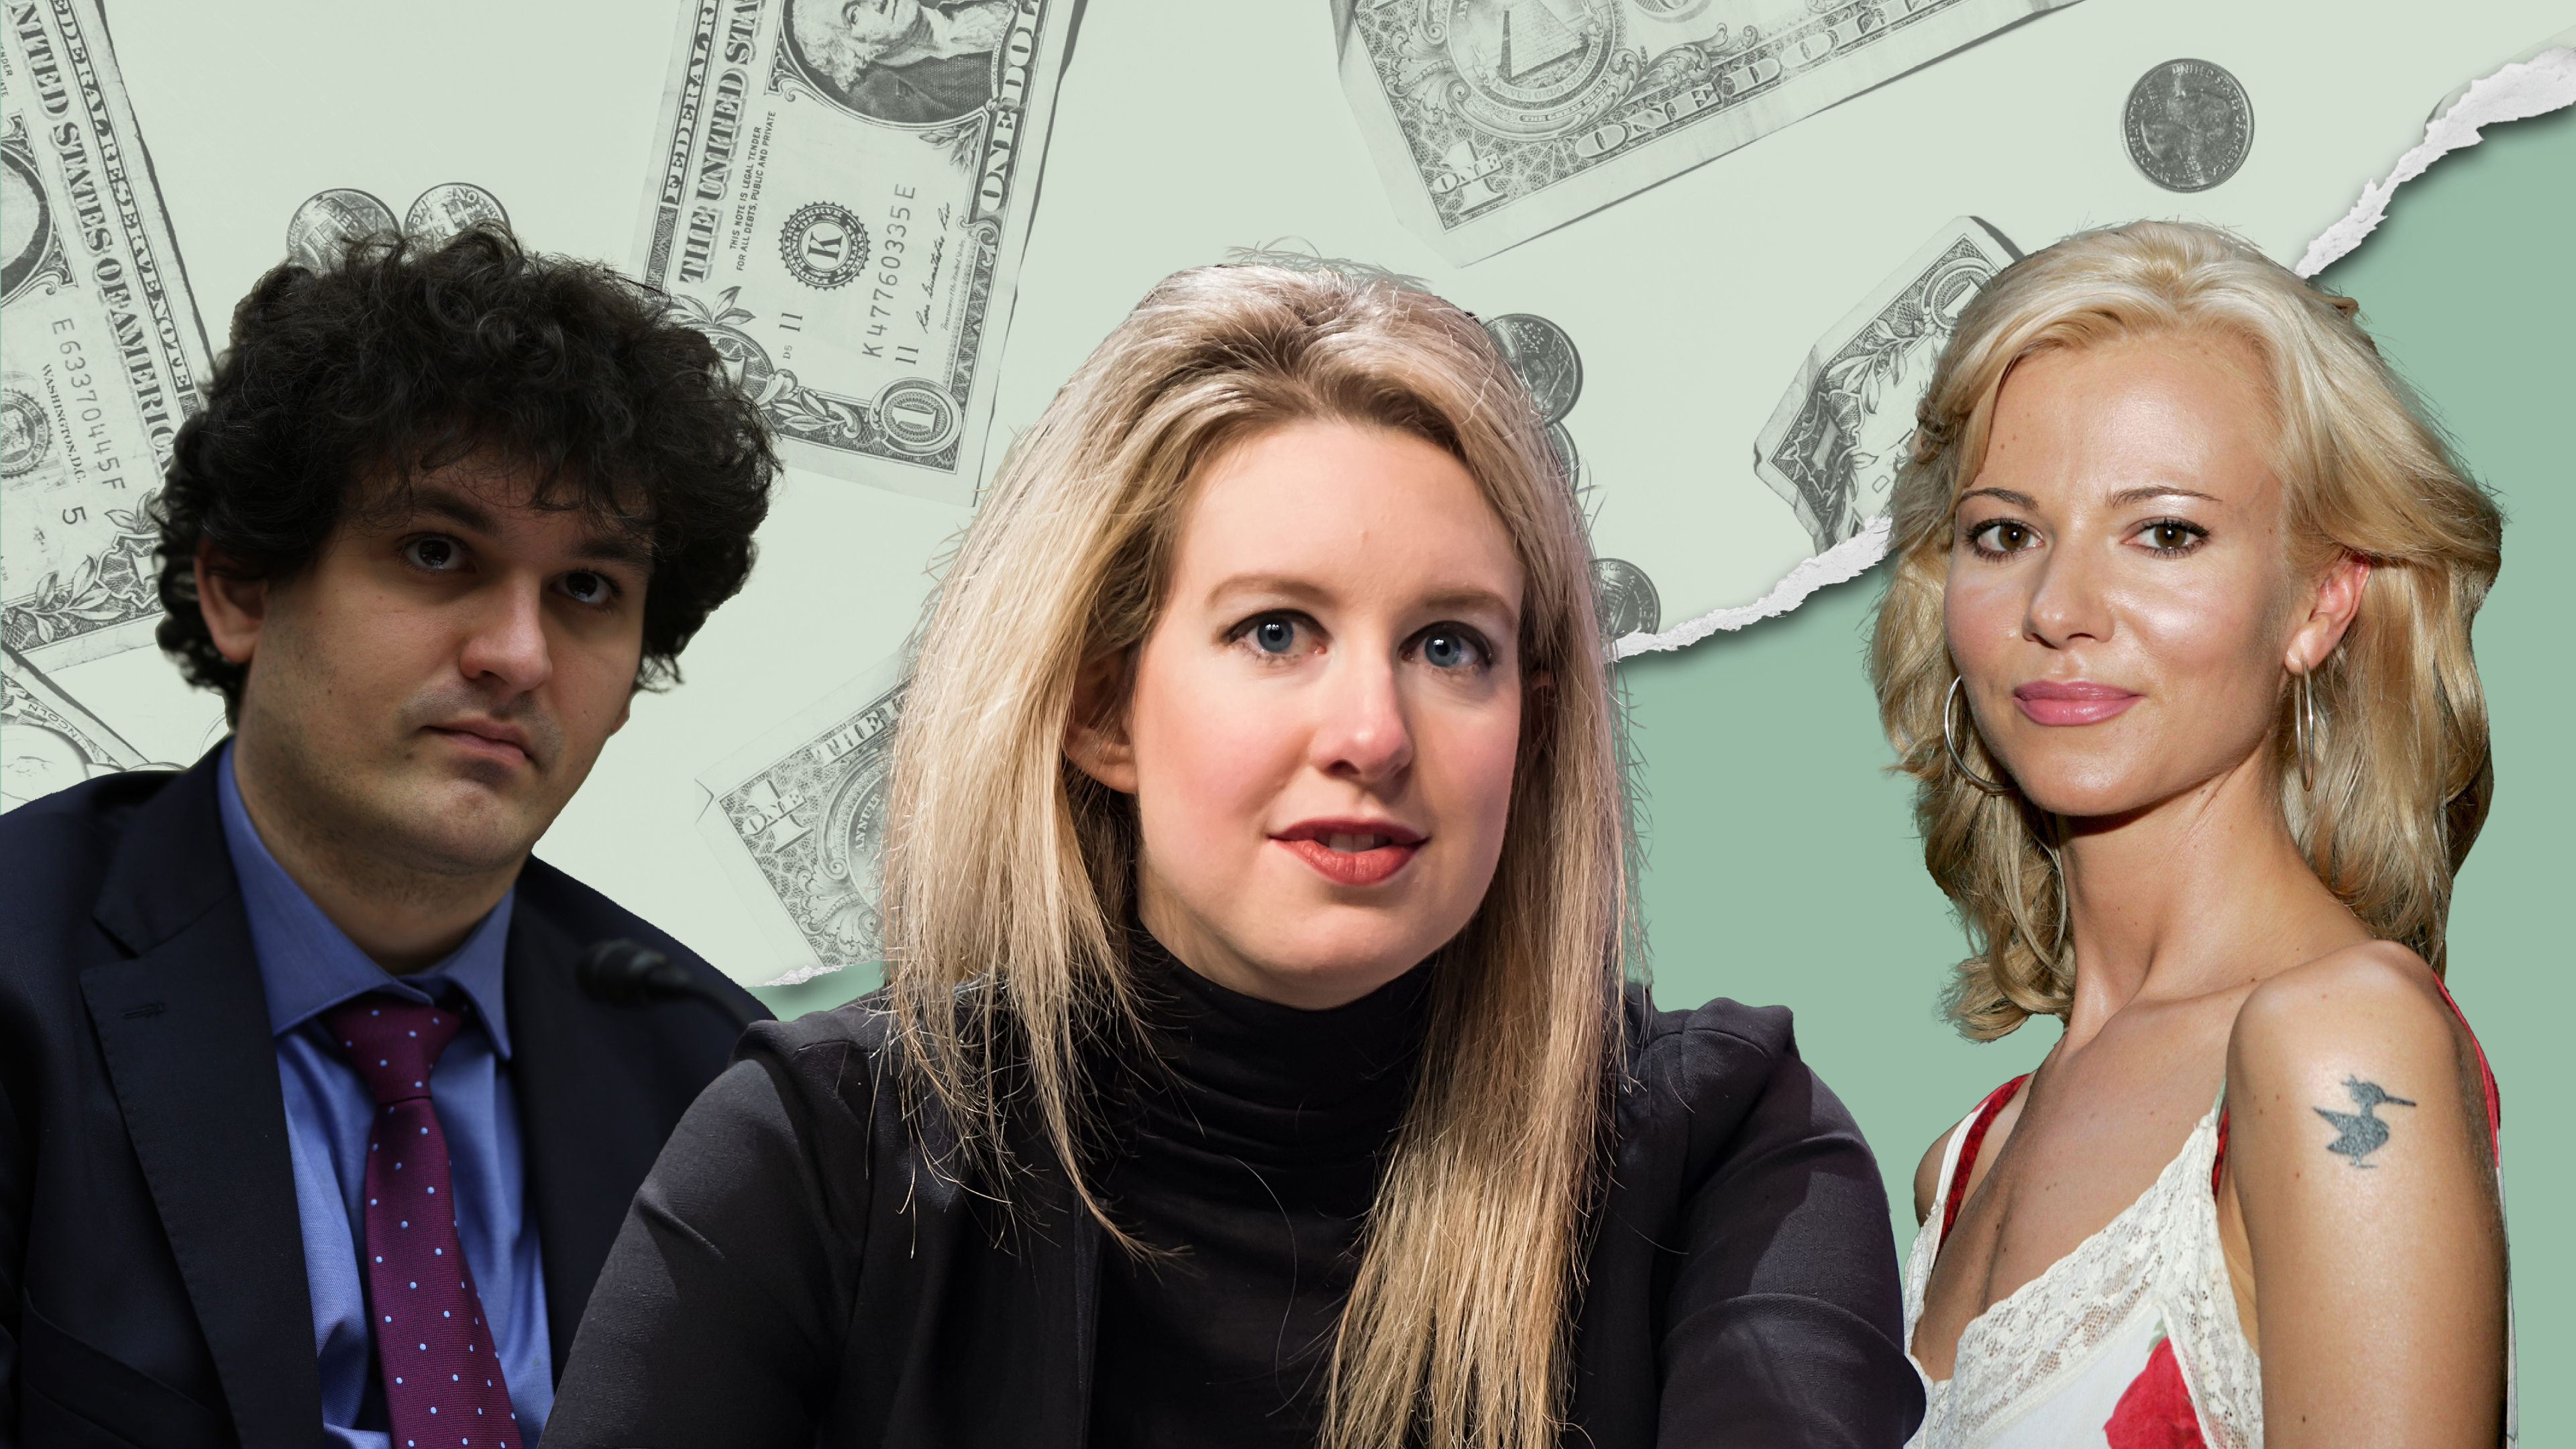 Images of Sam Bankman-Fried, Elizabeth Holmes, and Sarma Melngailis on top of money